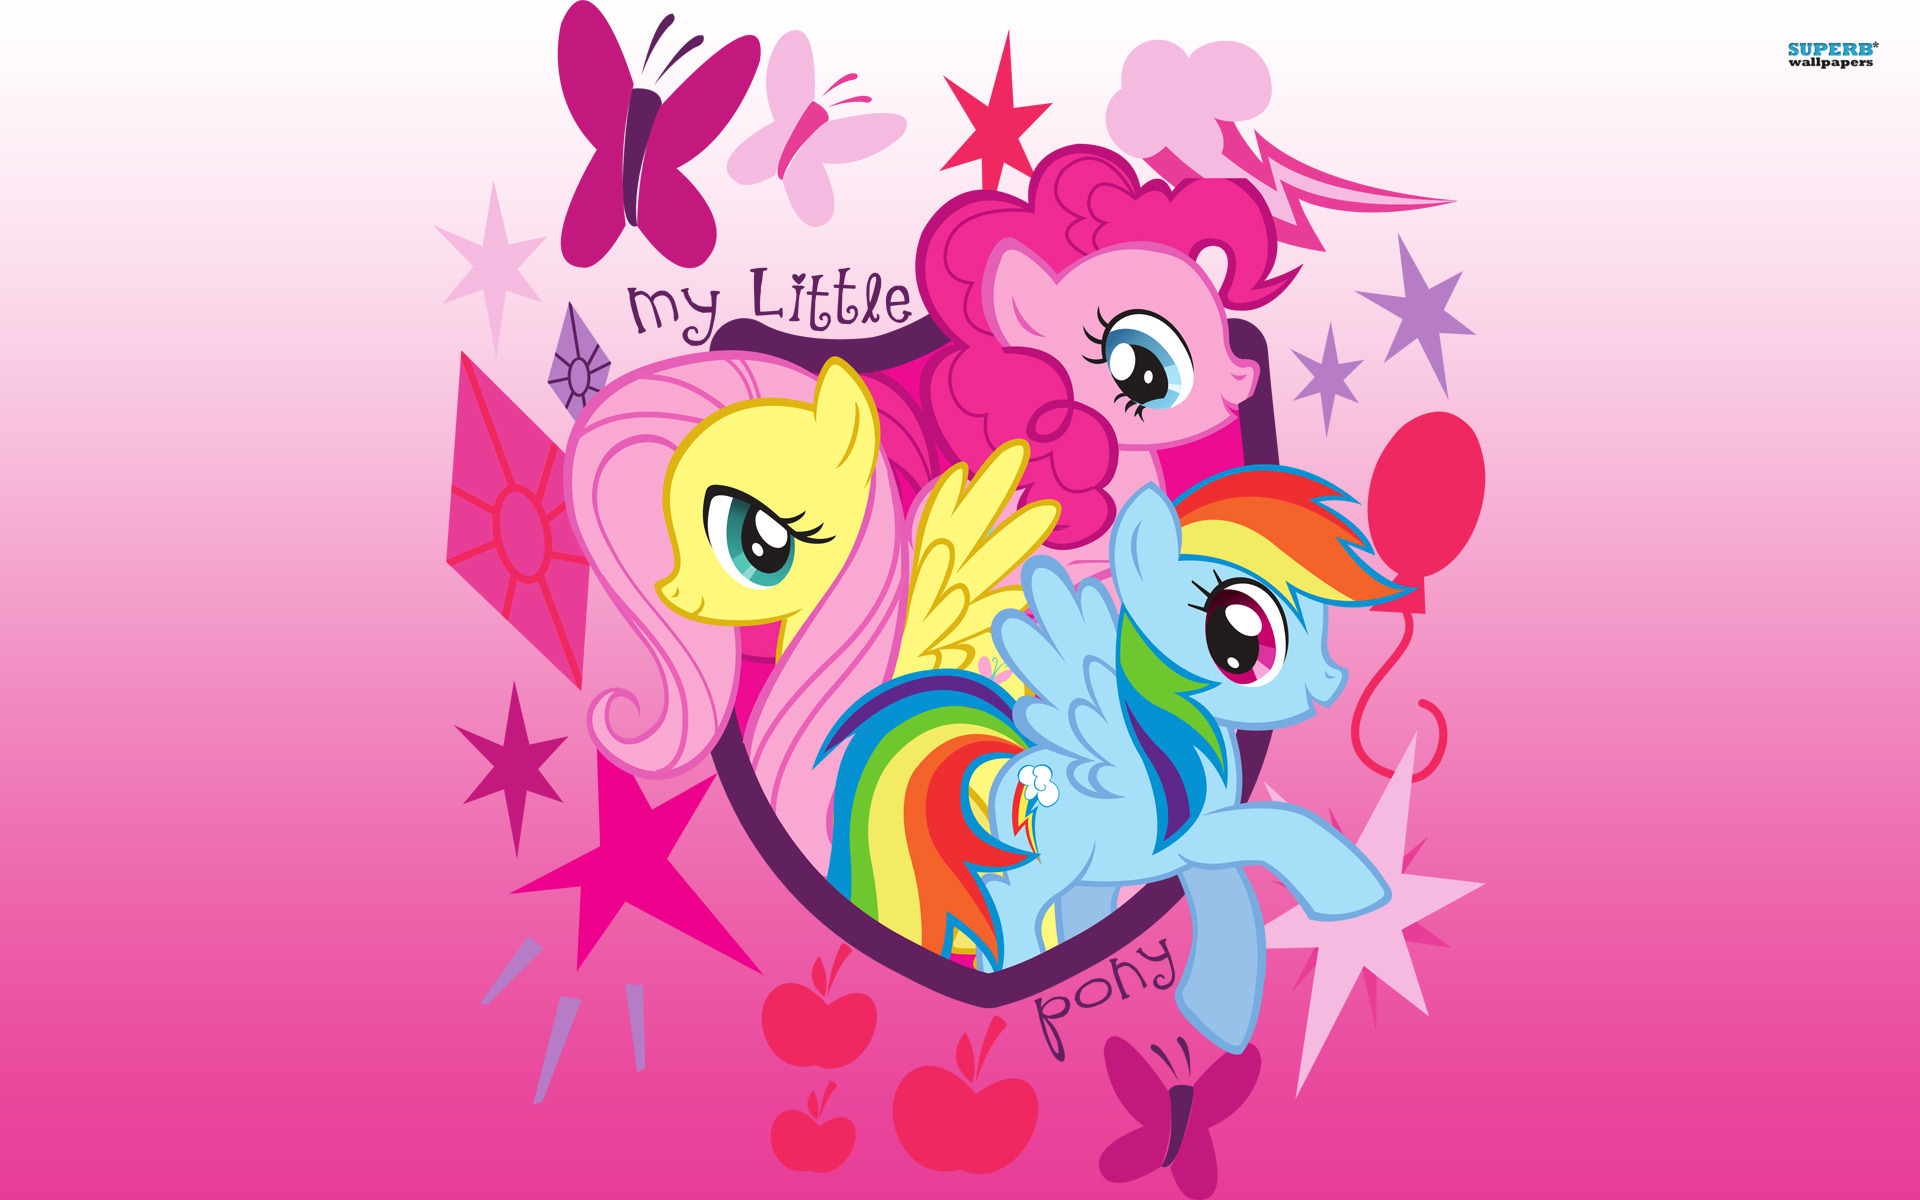 My Little Pony Friendship is Magic wallpaper 1920x1200 jpg